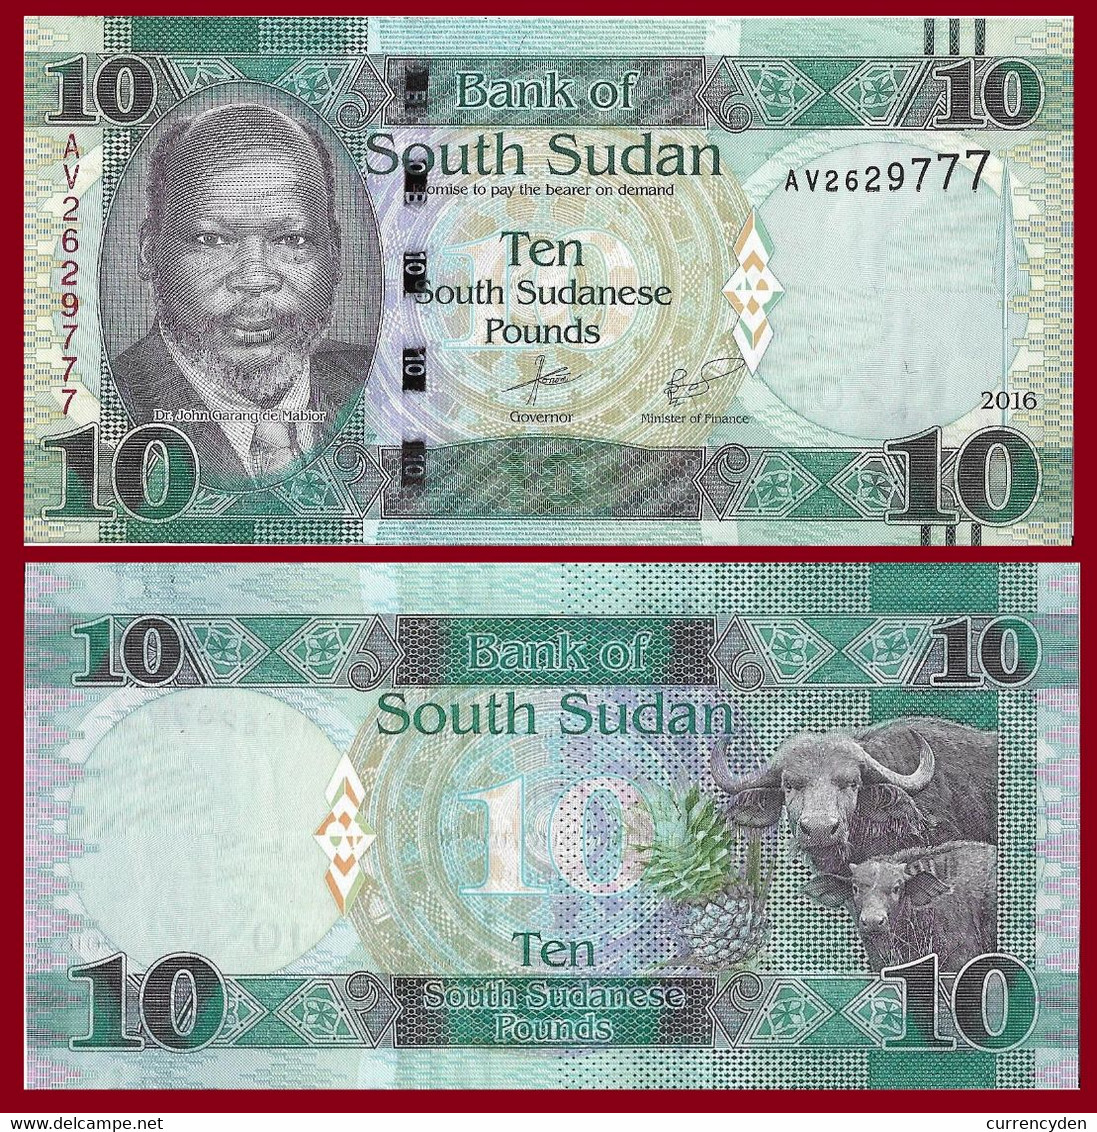 South Sudan P12b, 10 Pounds, Dr John De Mabior / Buffalos, Pineapple UNC $3CV - South Sudan